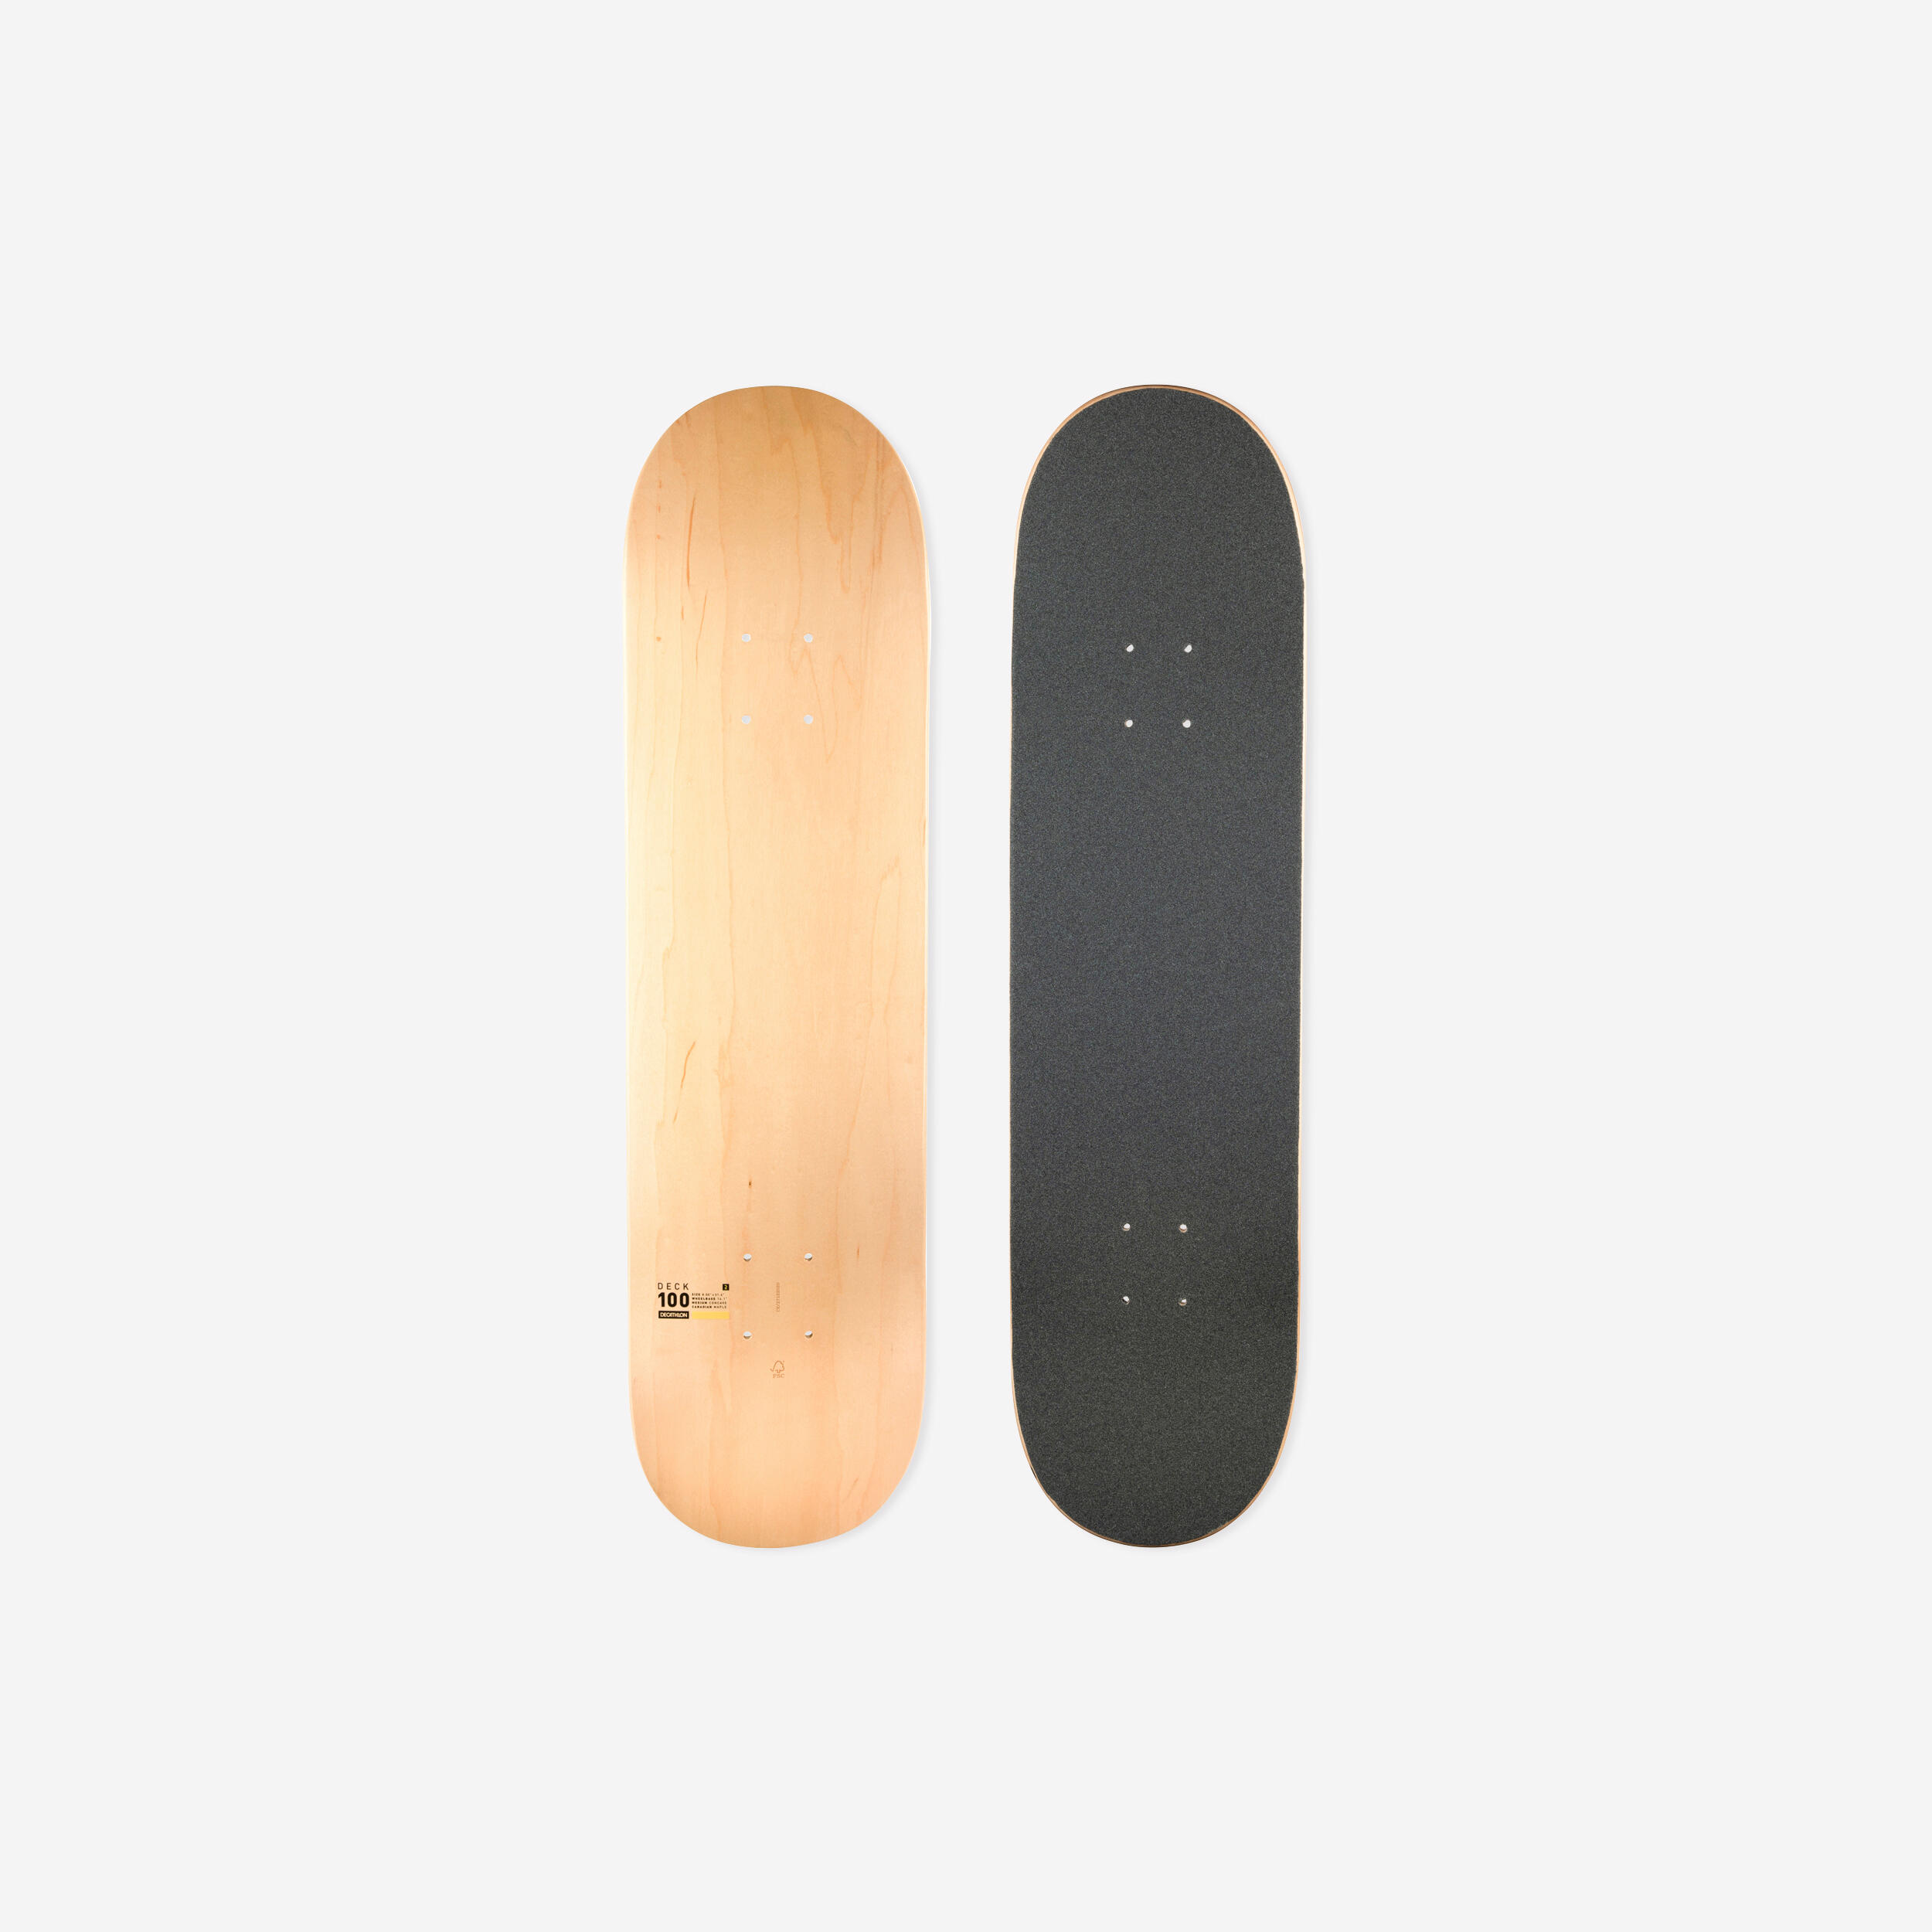 OXELO Maple Skateboard Deck with Grip DK100 8"